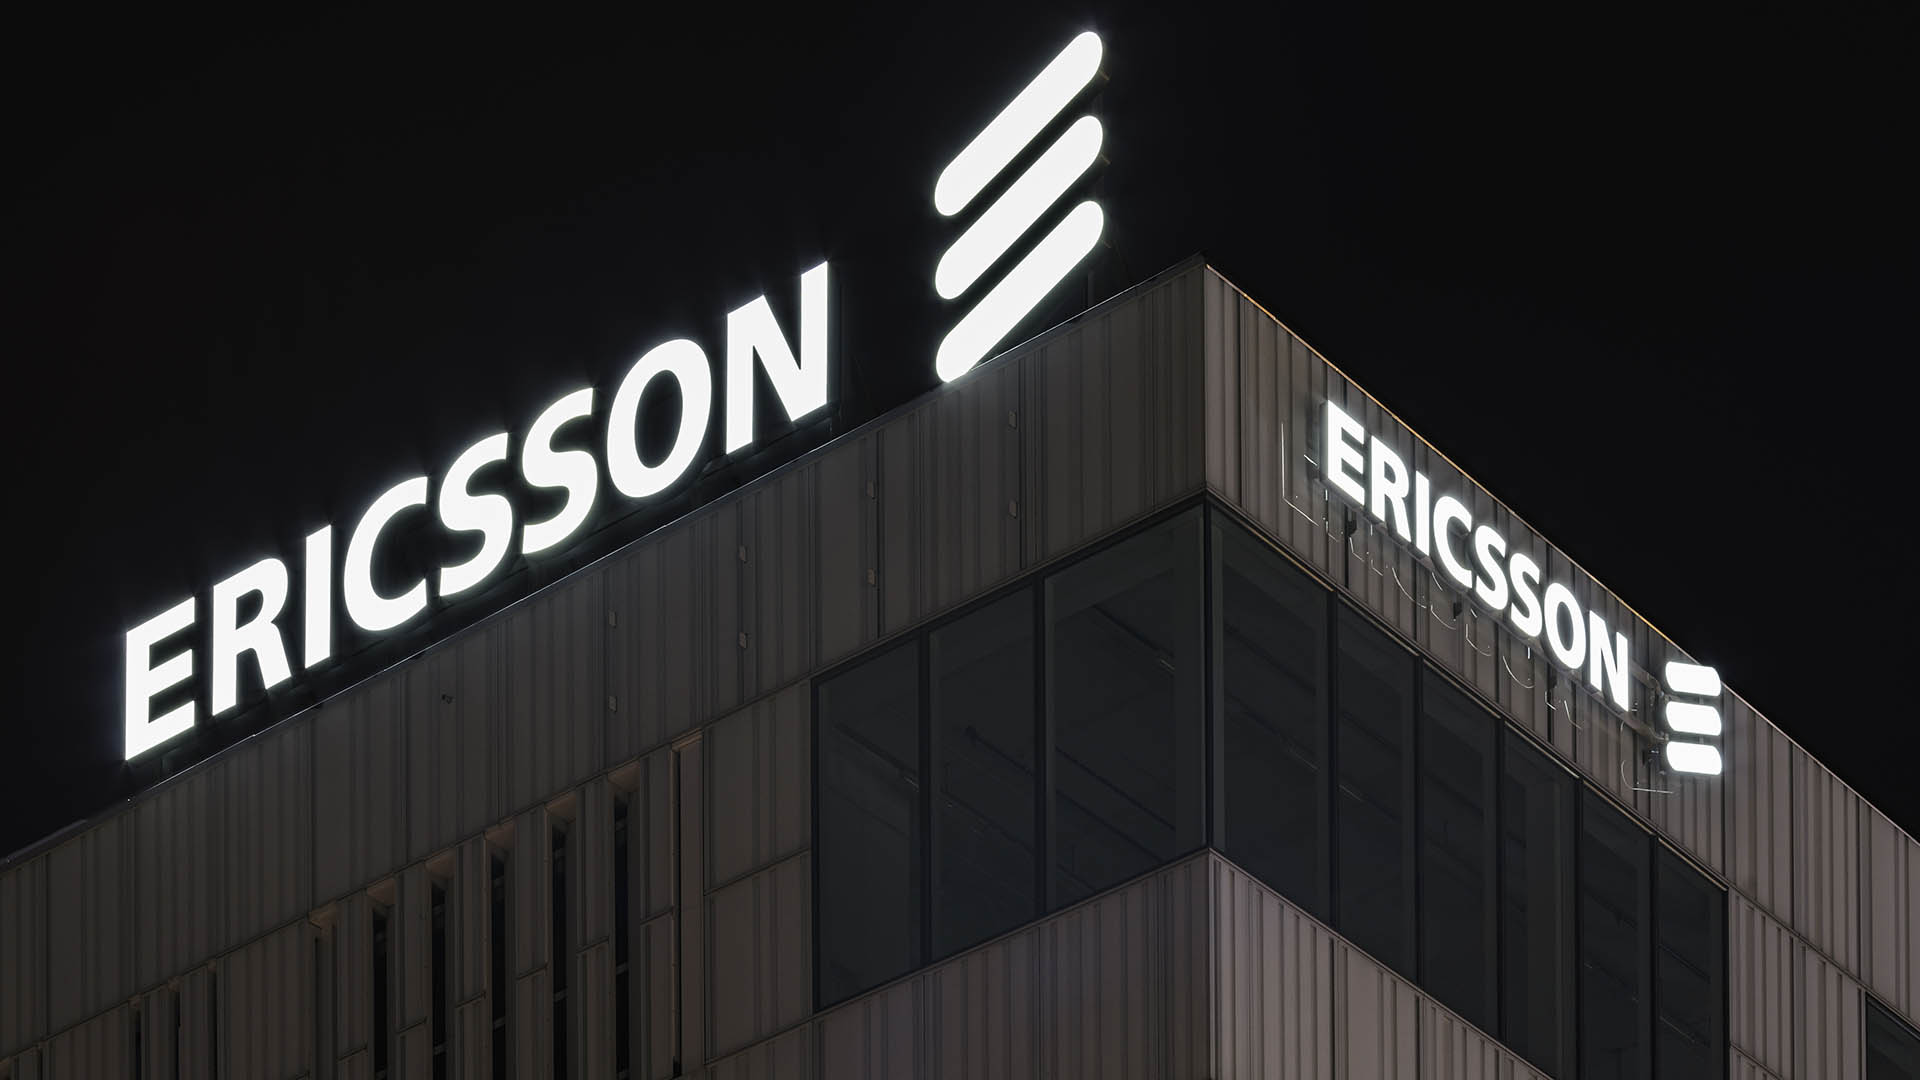 Ericsson offices photo by Ericsson